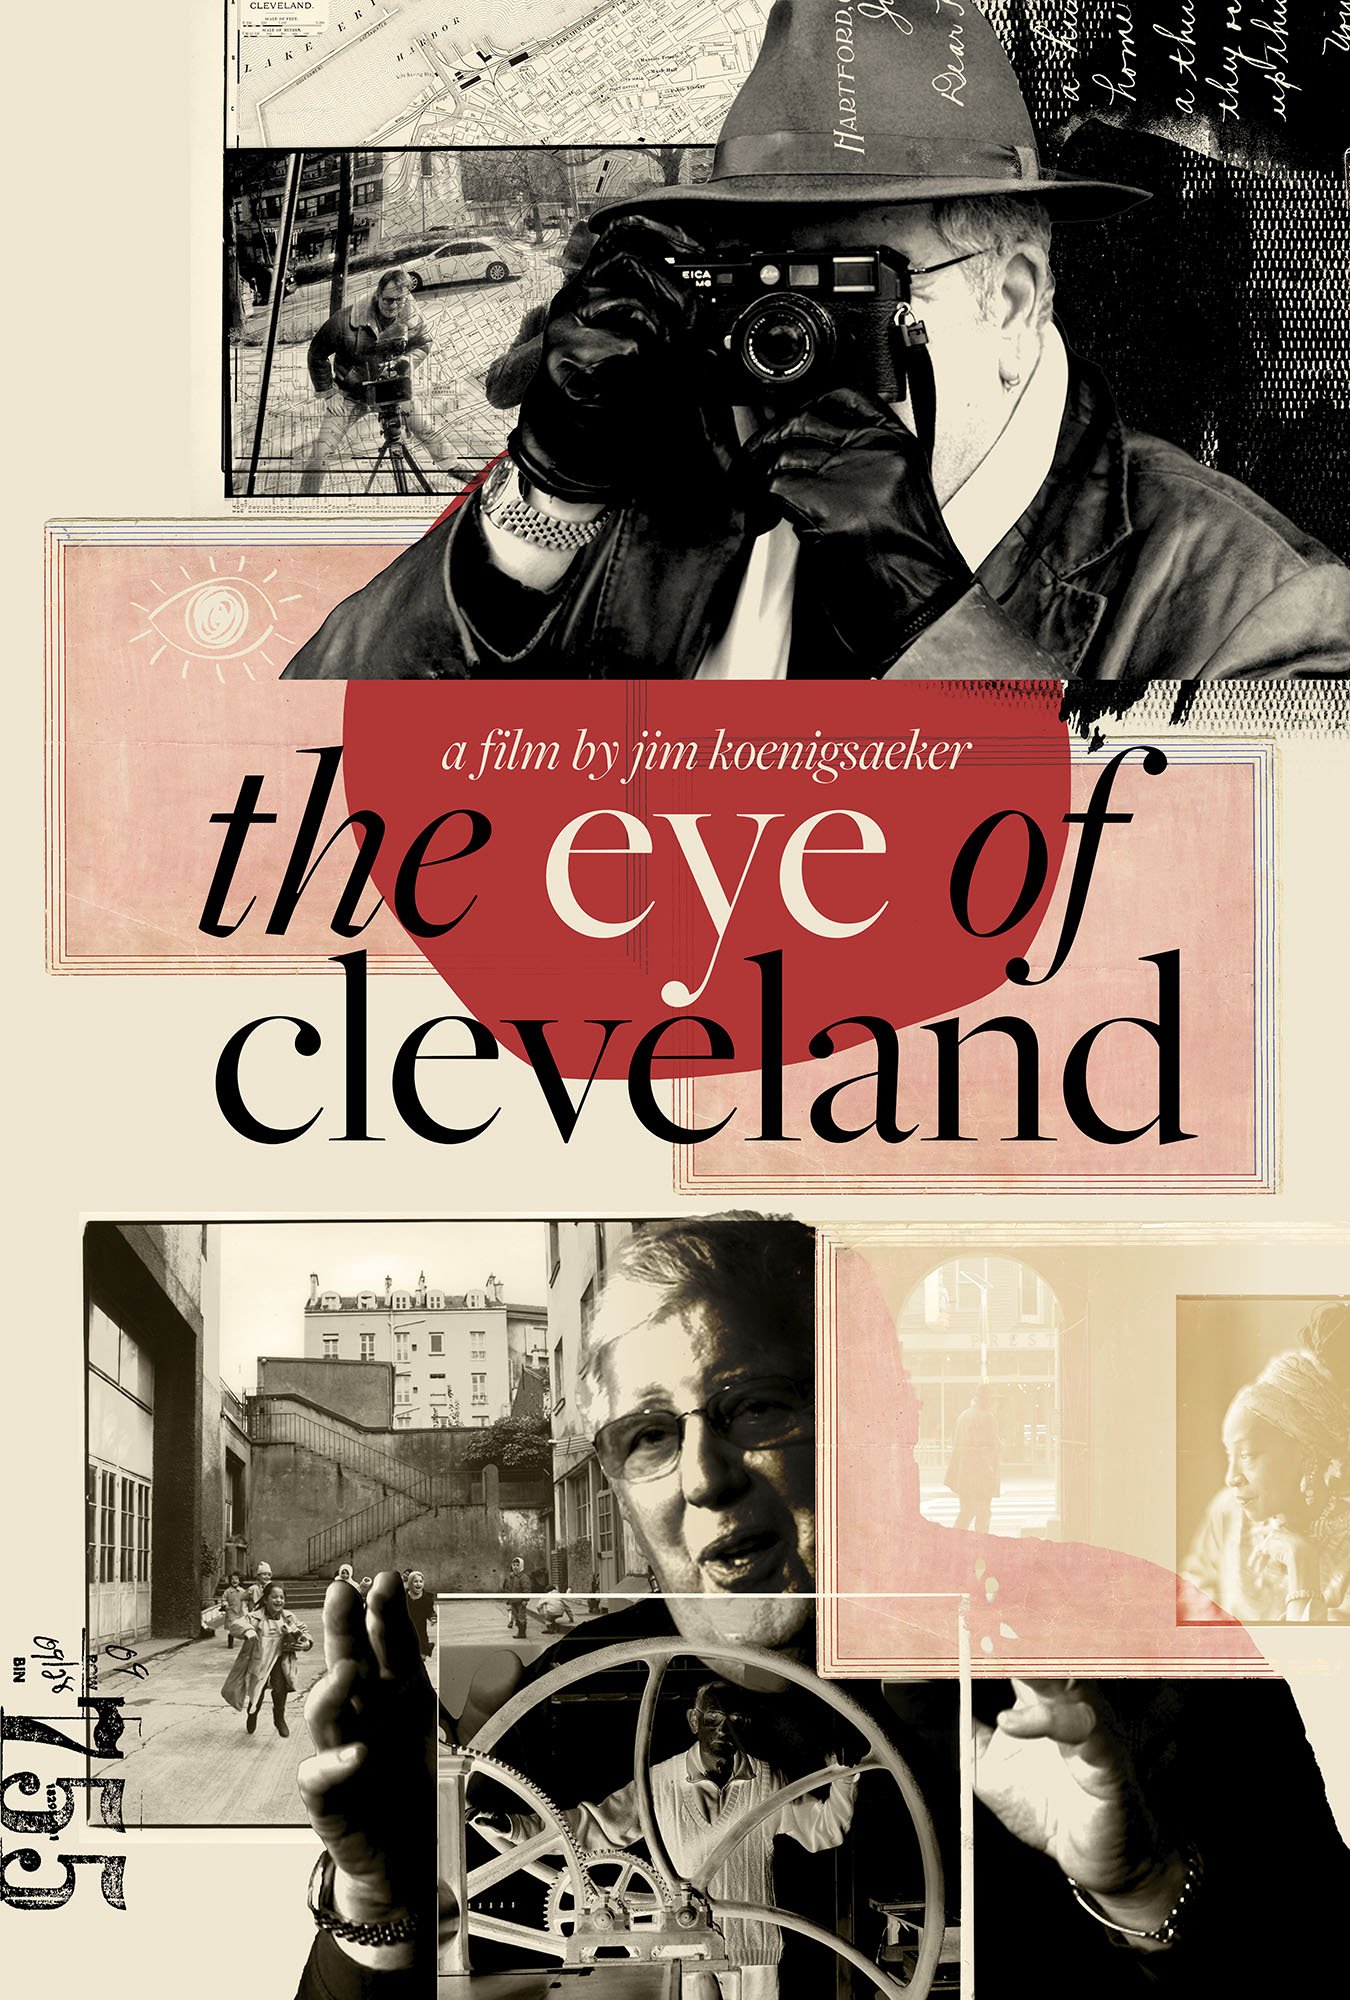 Coming soon! The Eye of Cleveland, a film by Jim Koenigsaecker